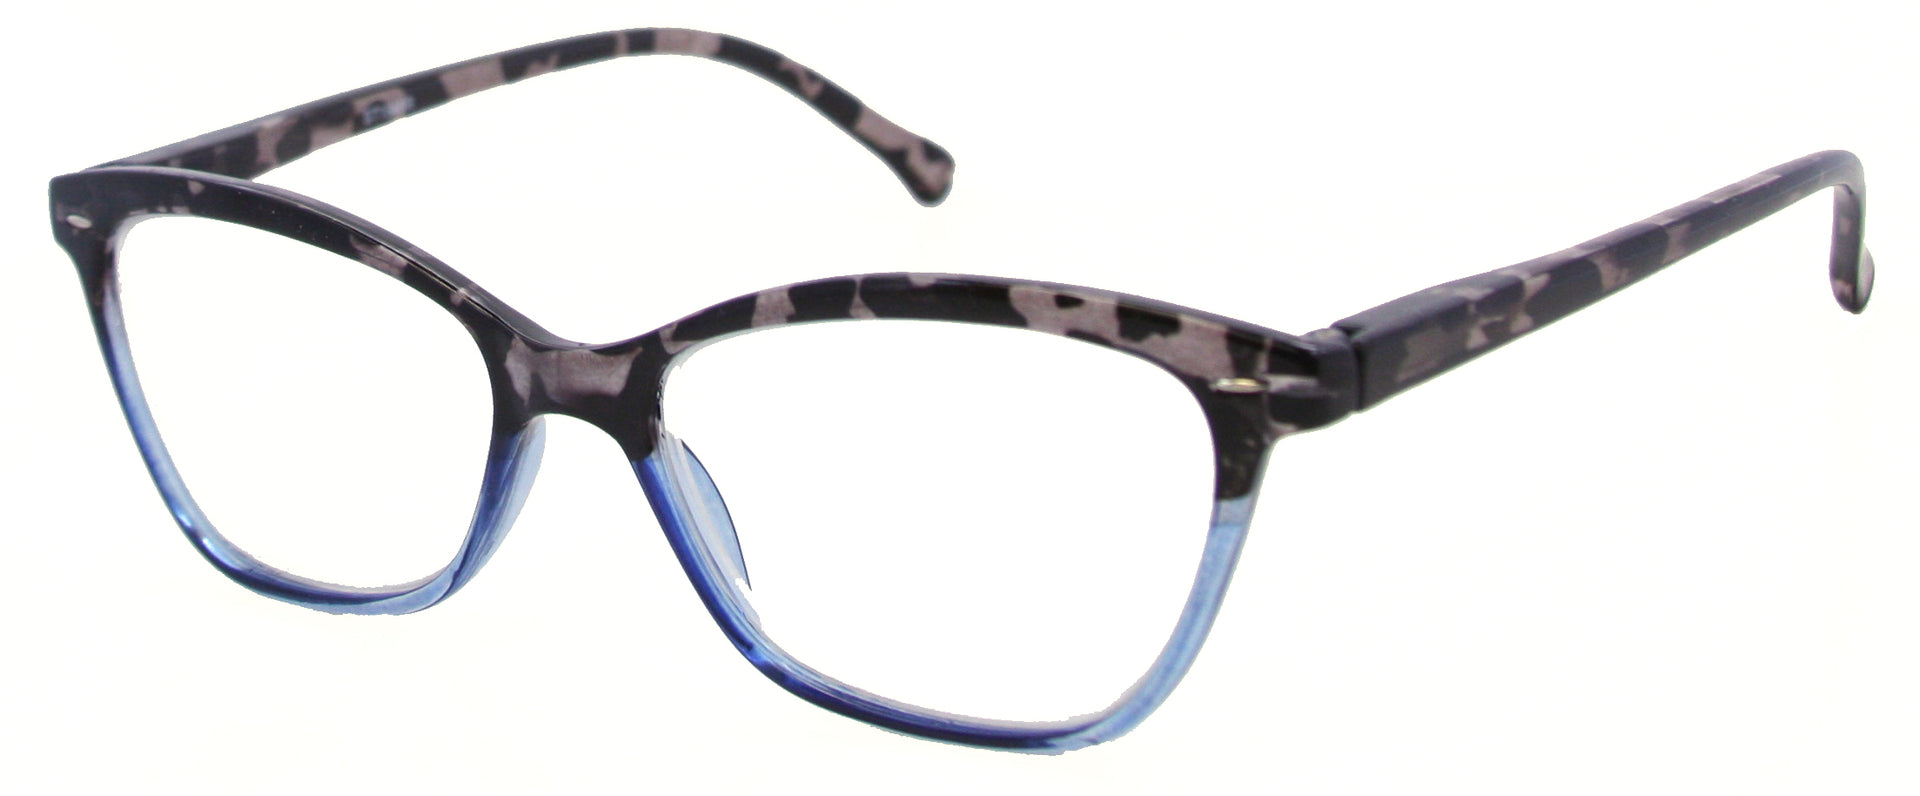 ST1949R - Wholesale Two Toned Cat Eye Women's Reading Glasses in Blue